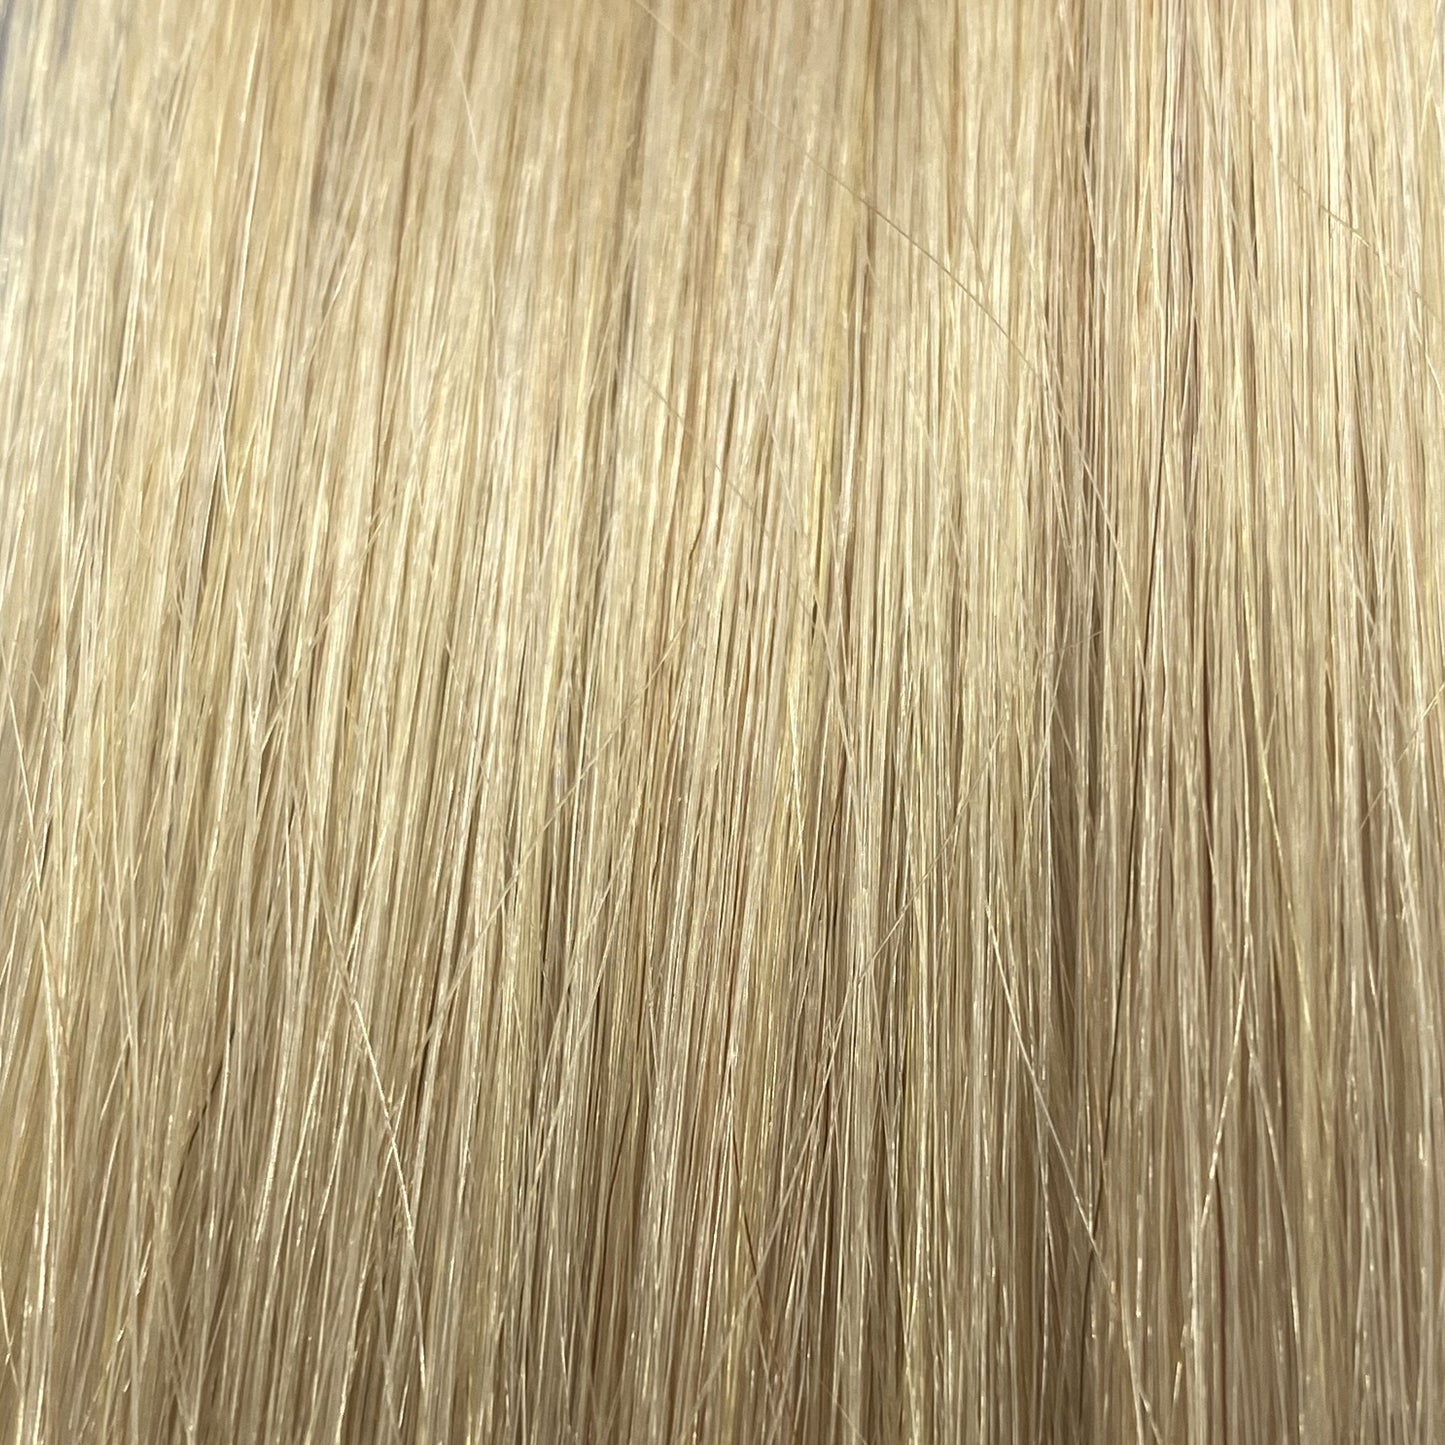 Fusion #1002 - 50cm/20 inches - Very Light Ash Blonde Fusion Euro So Cap 